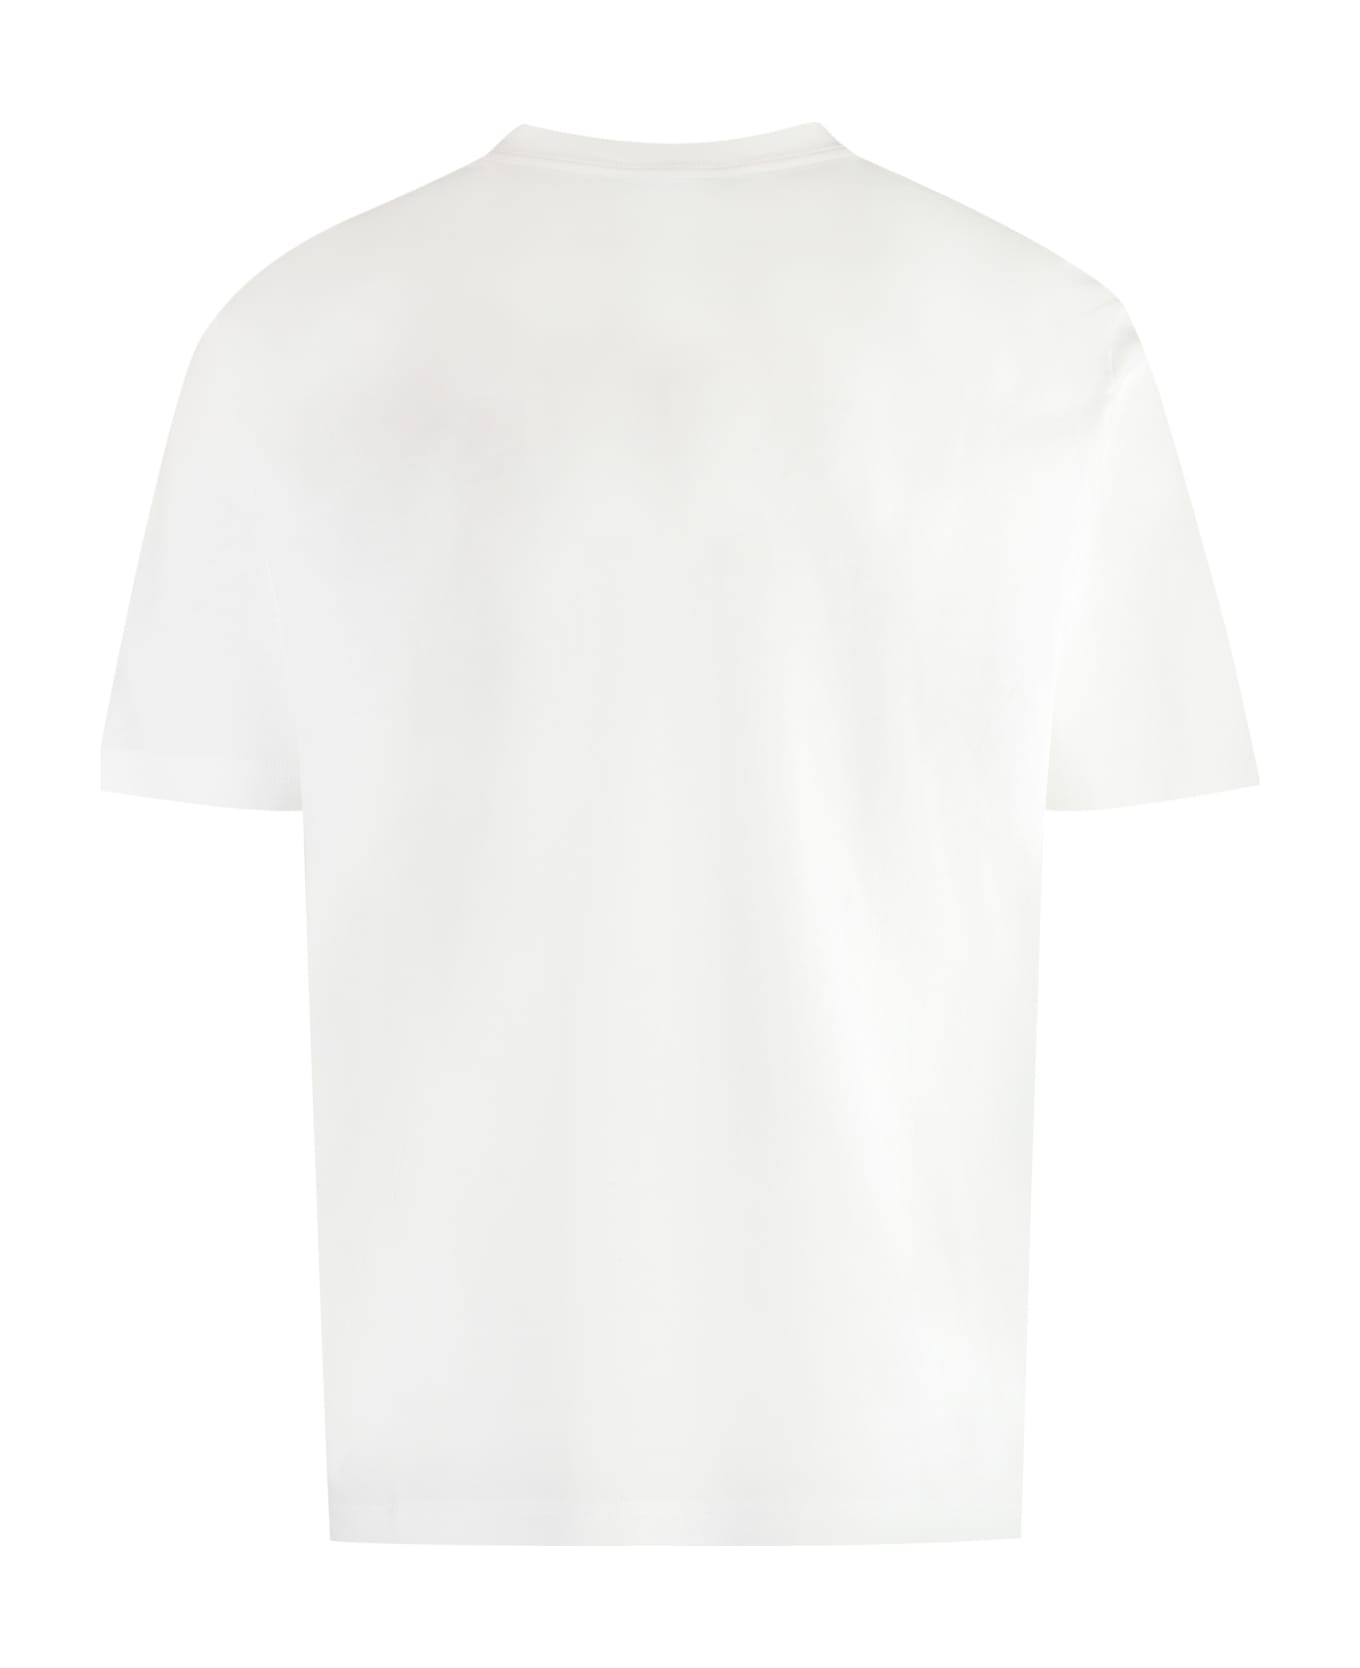 Lanvin Cotton Crew-neck T-shirt - White